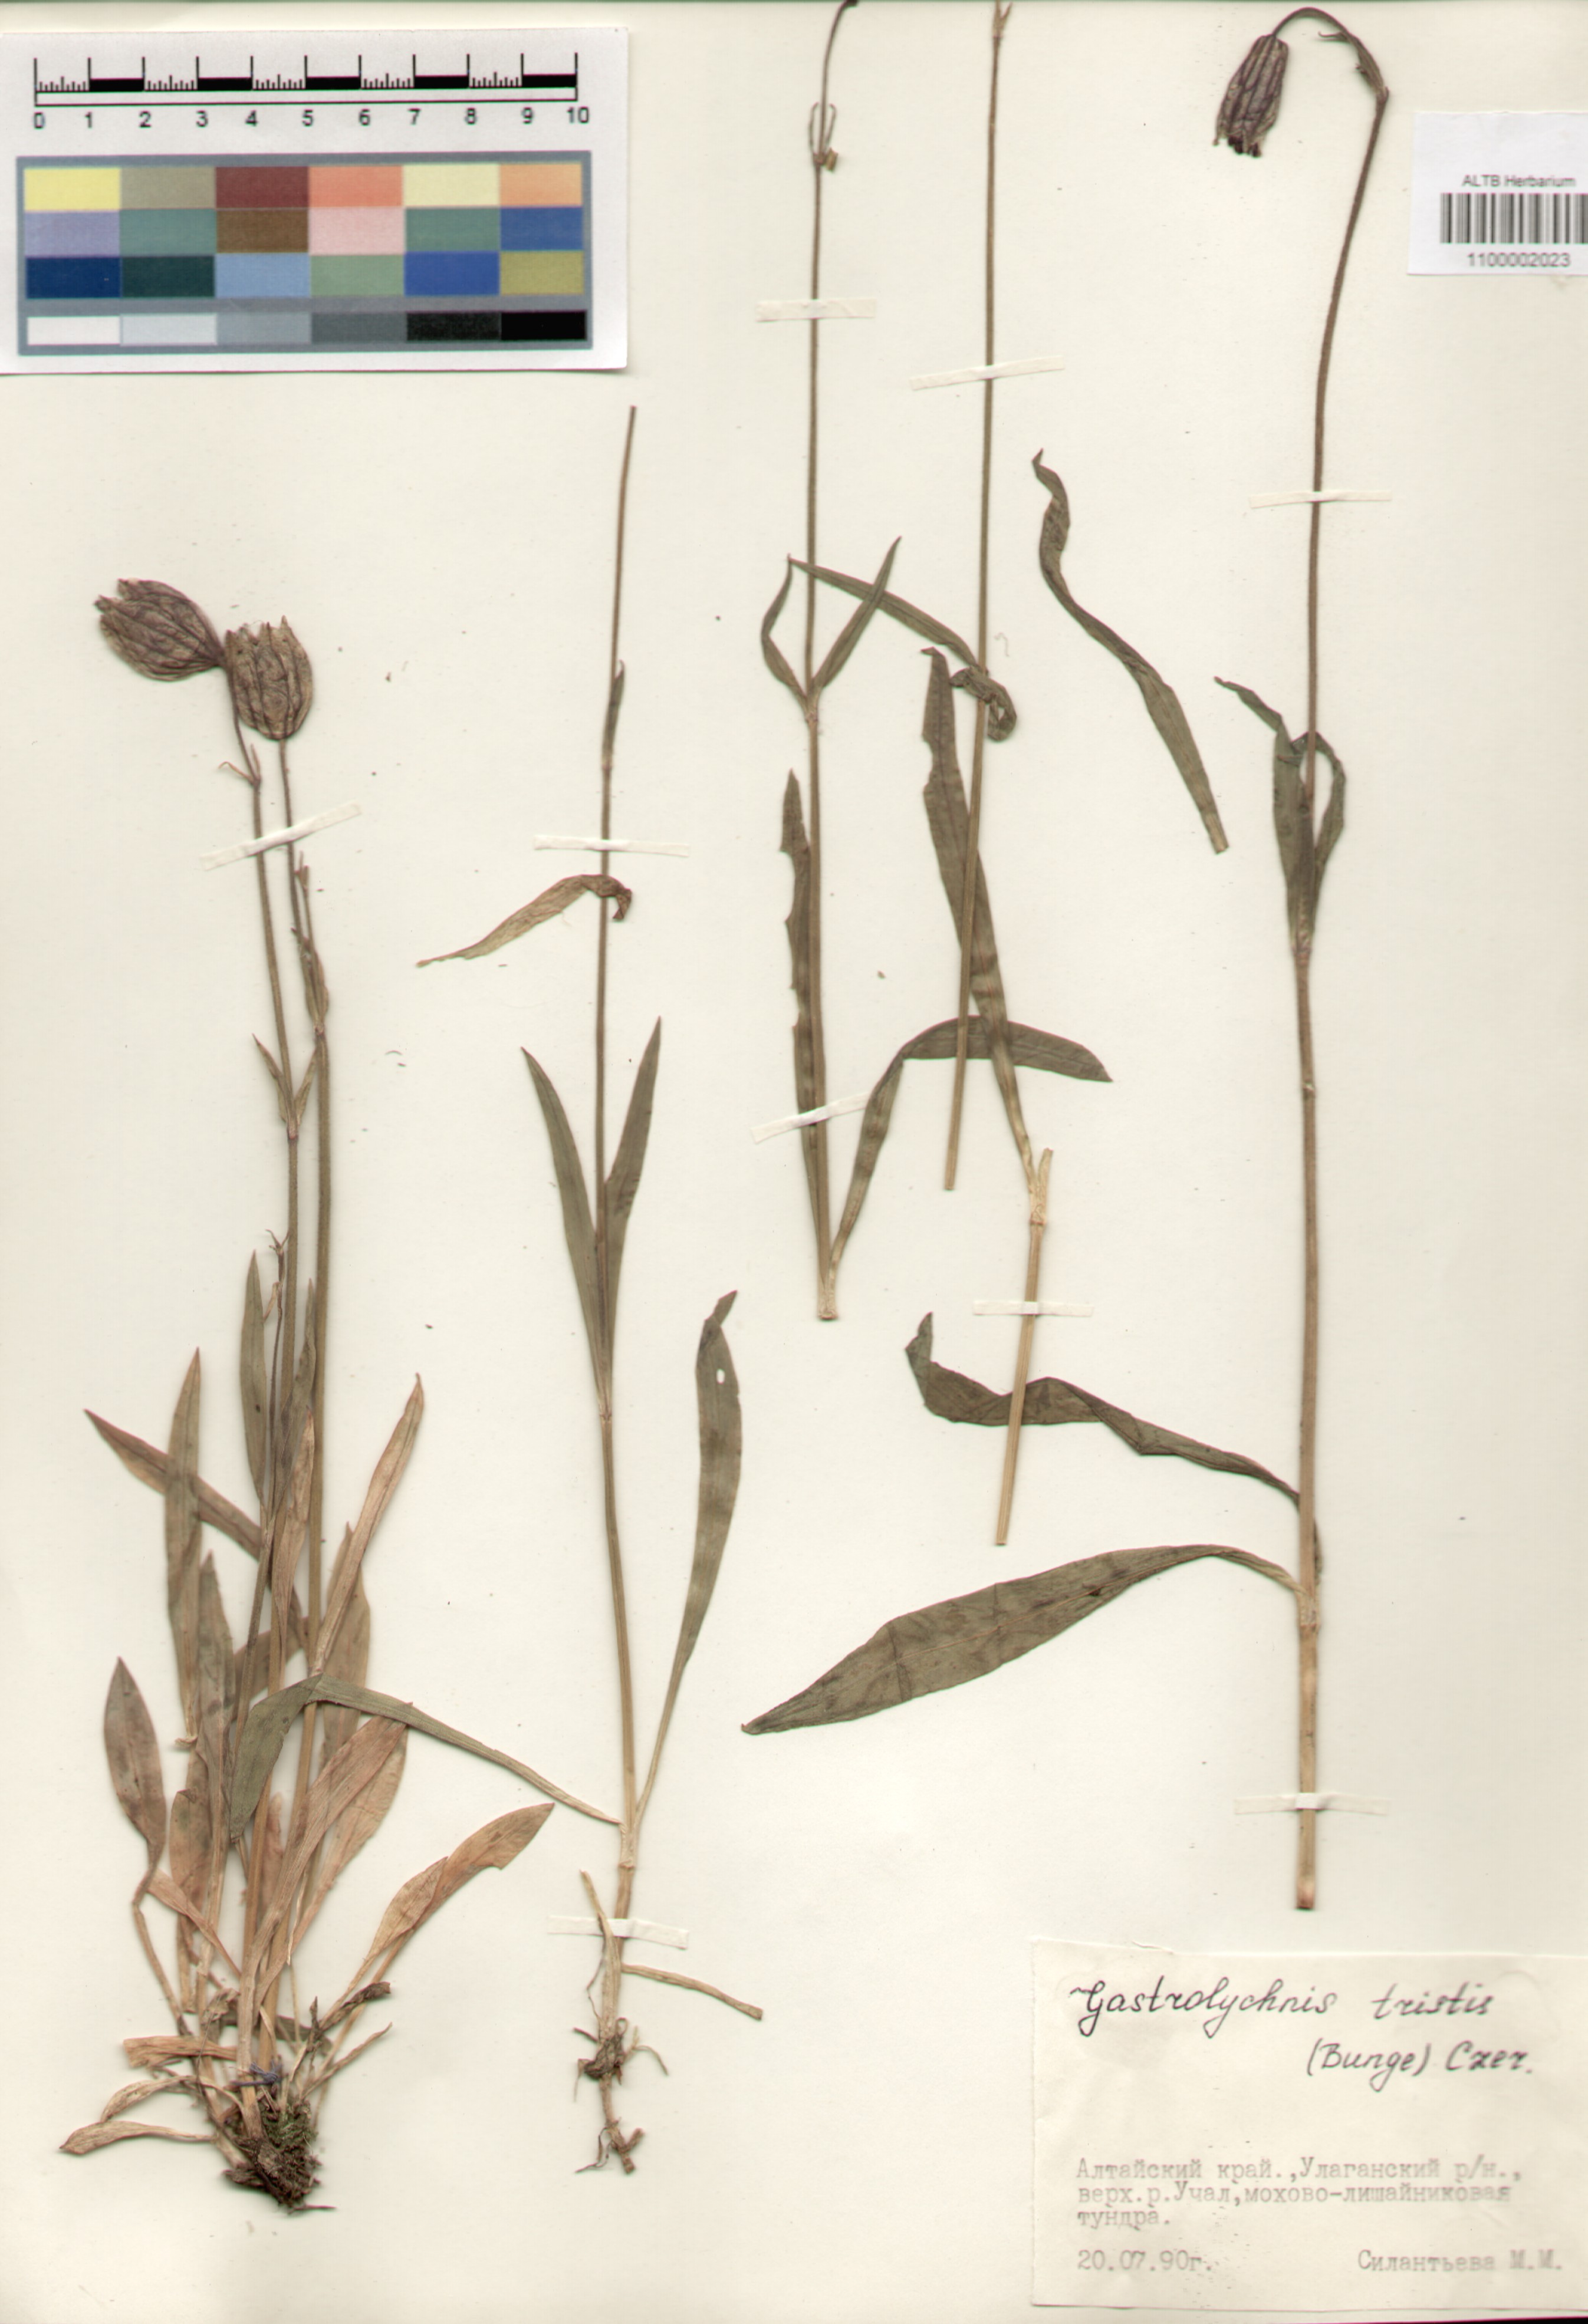 Caryophyllaceae,Gastrolychnis tristis (Bunge) Czer.